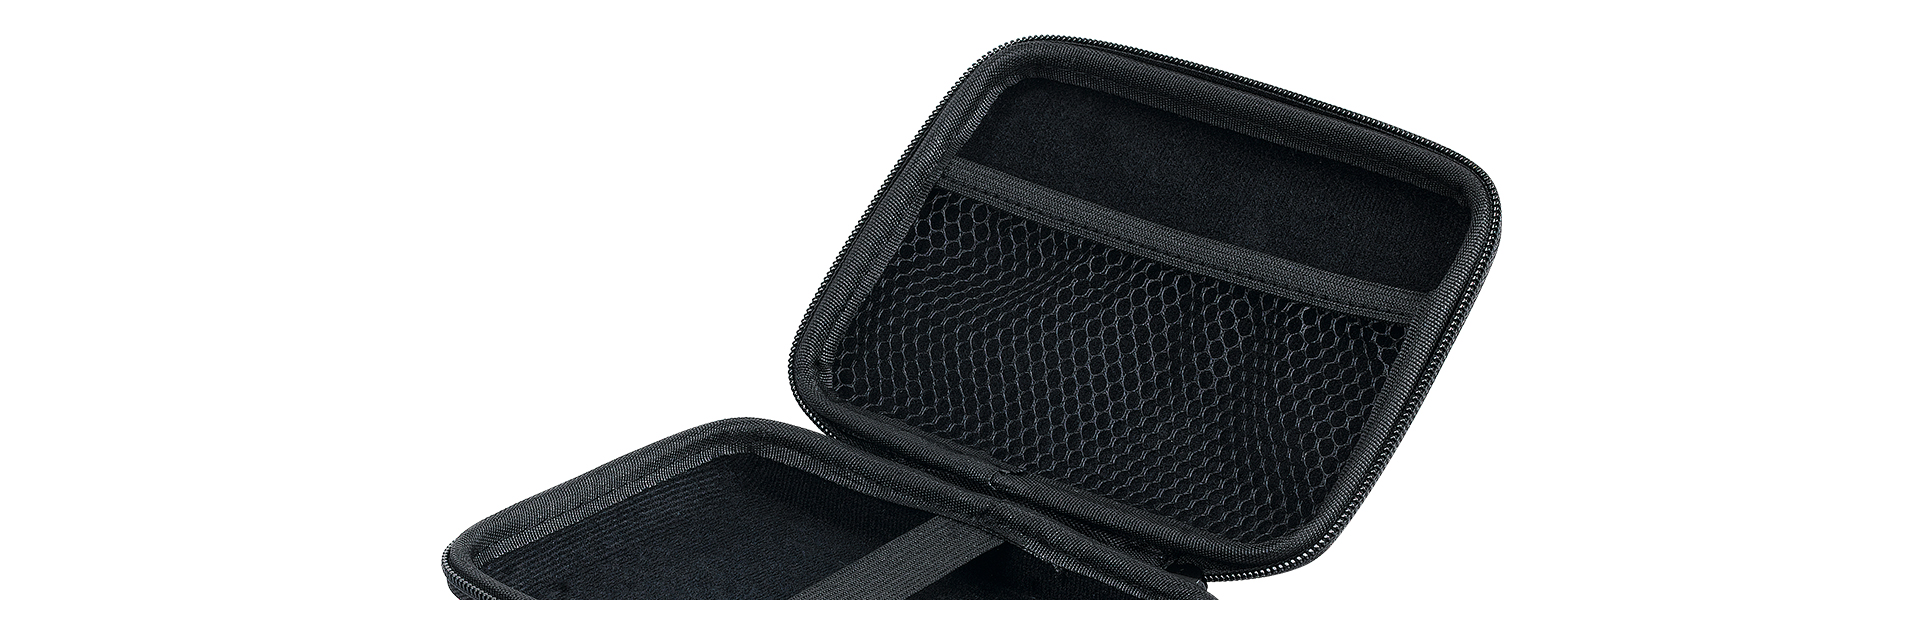 ORICO - portable storage bag - Shockproof - compact design - EVA material - ORICO PHB-25 - Amman Jordan - Pccircle 